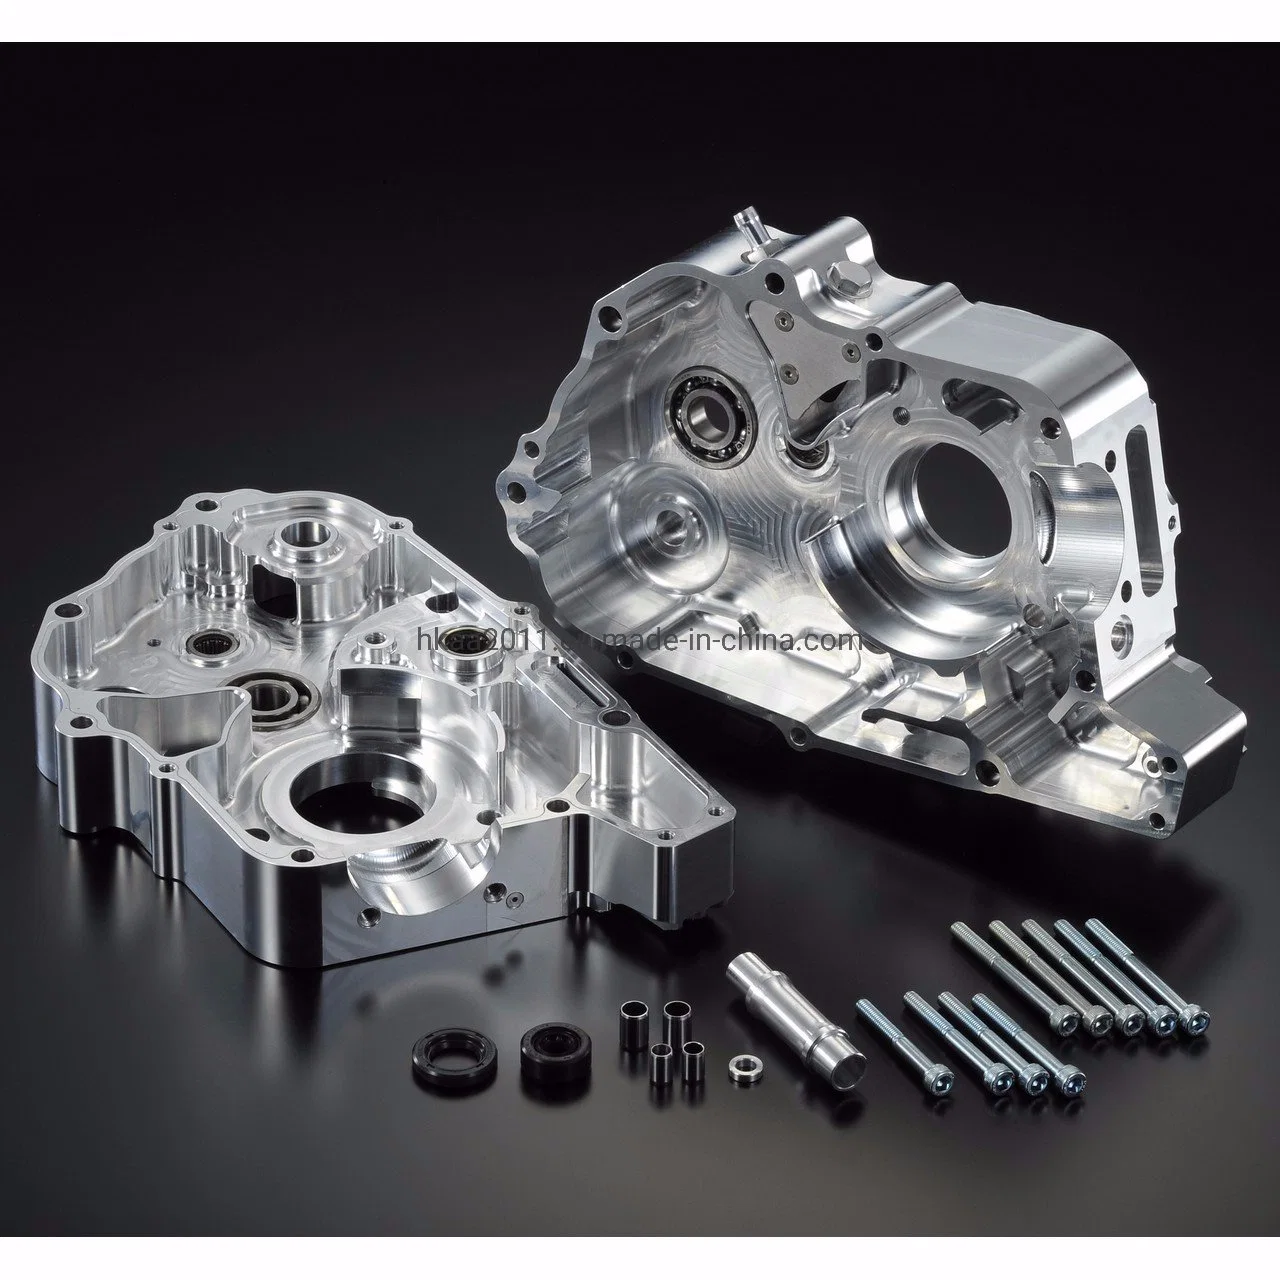 High Precision CNC Machined Billet Aluminum Engine Case Kit for Racing Car